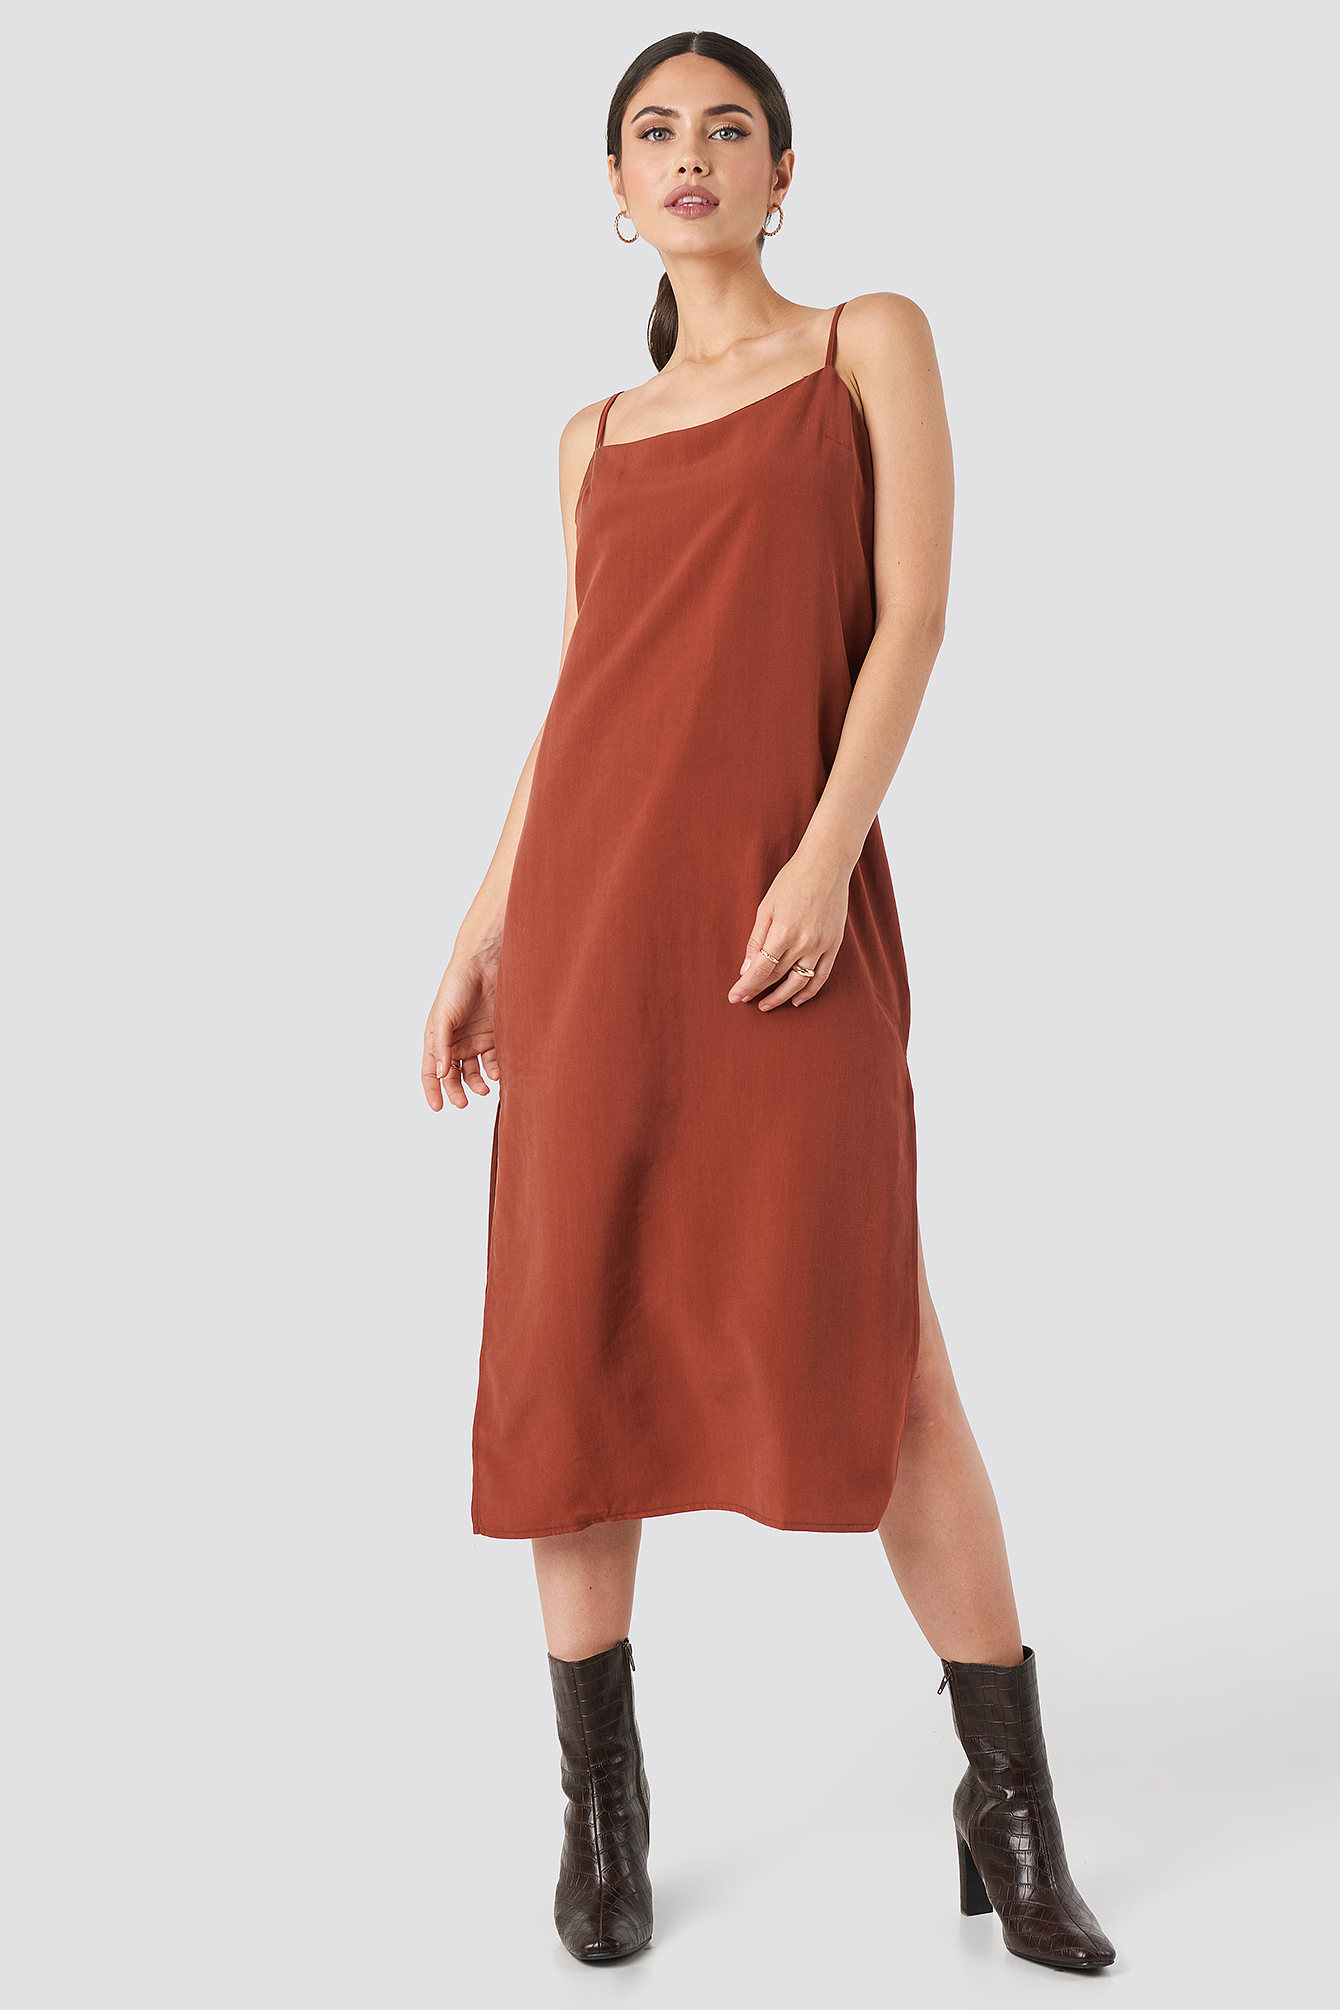 Tile Red Tencel Maxi dress